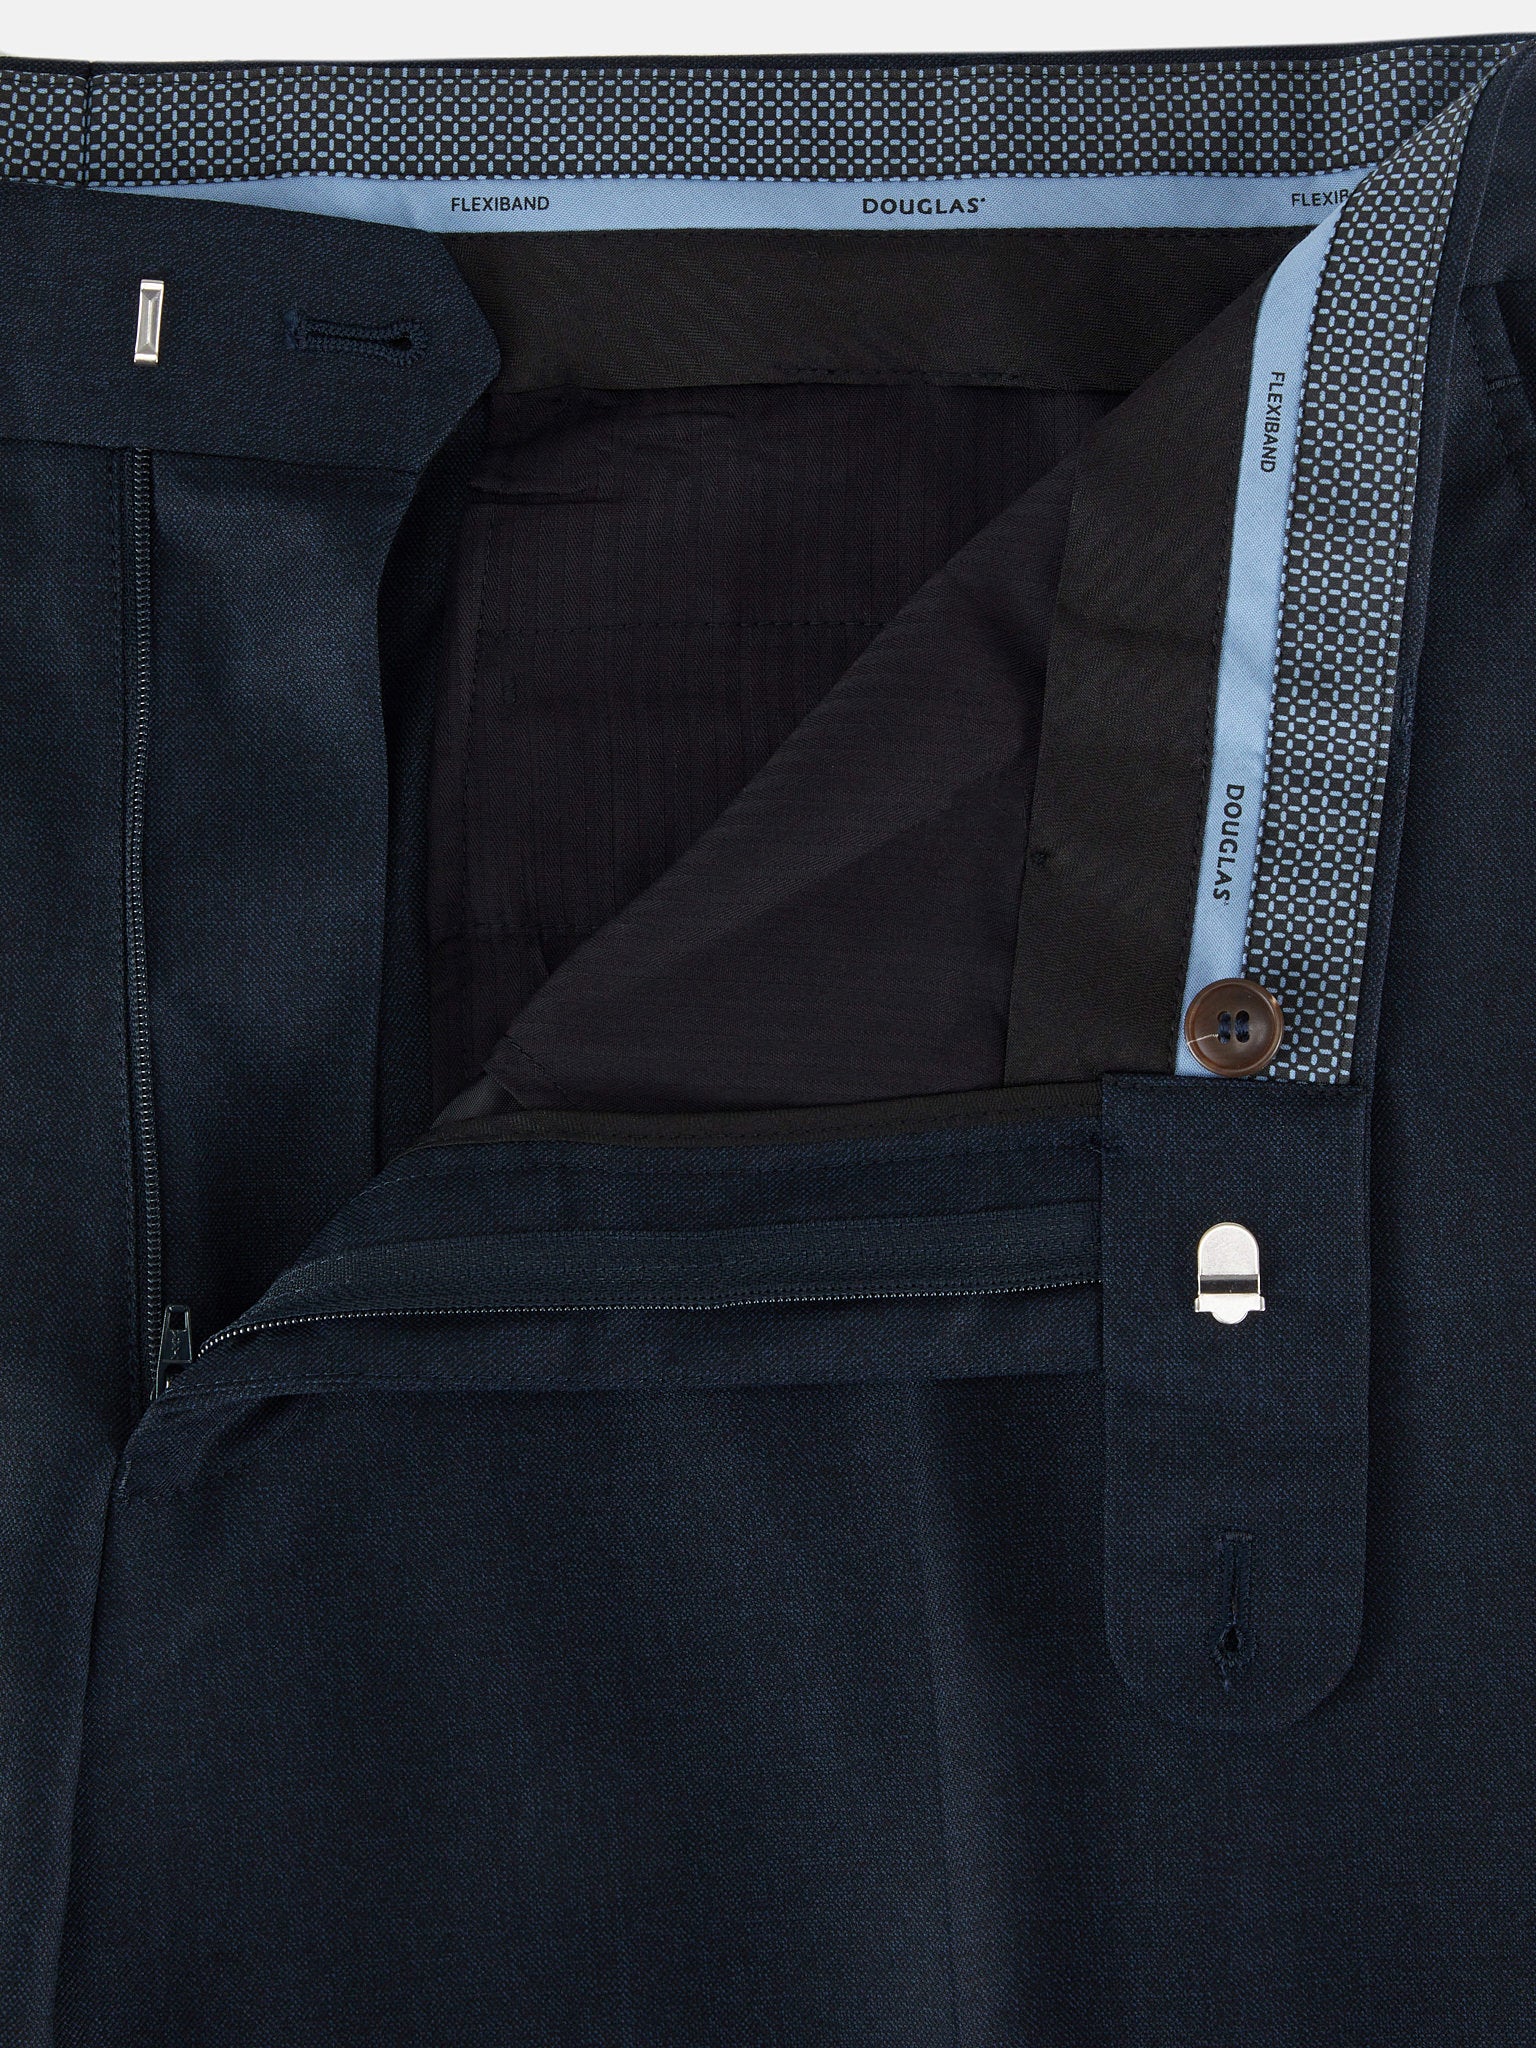 Douglas Valdino Dark Blue Mix & Match Suit Trousers Short Length